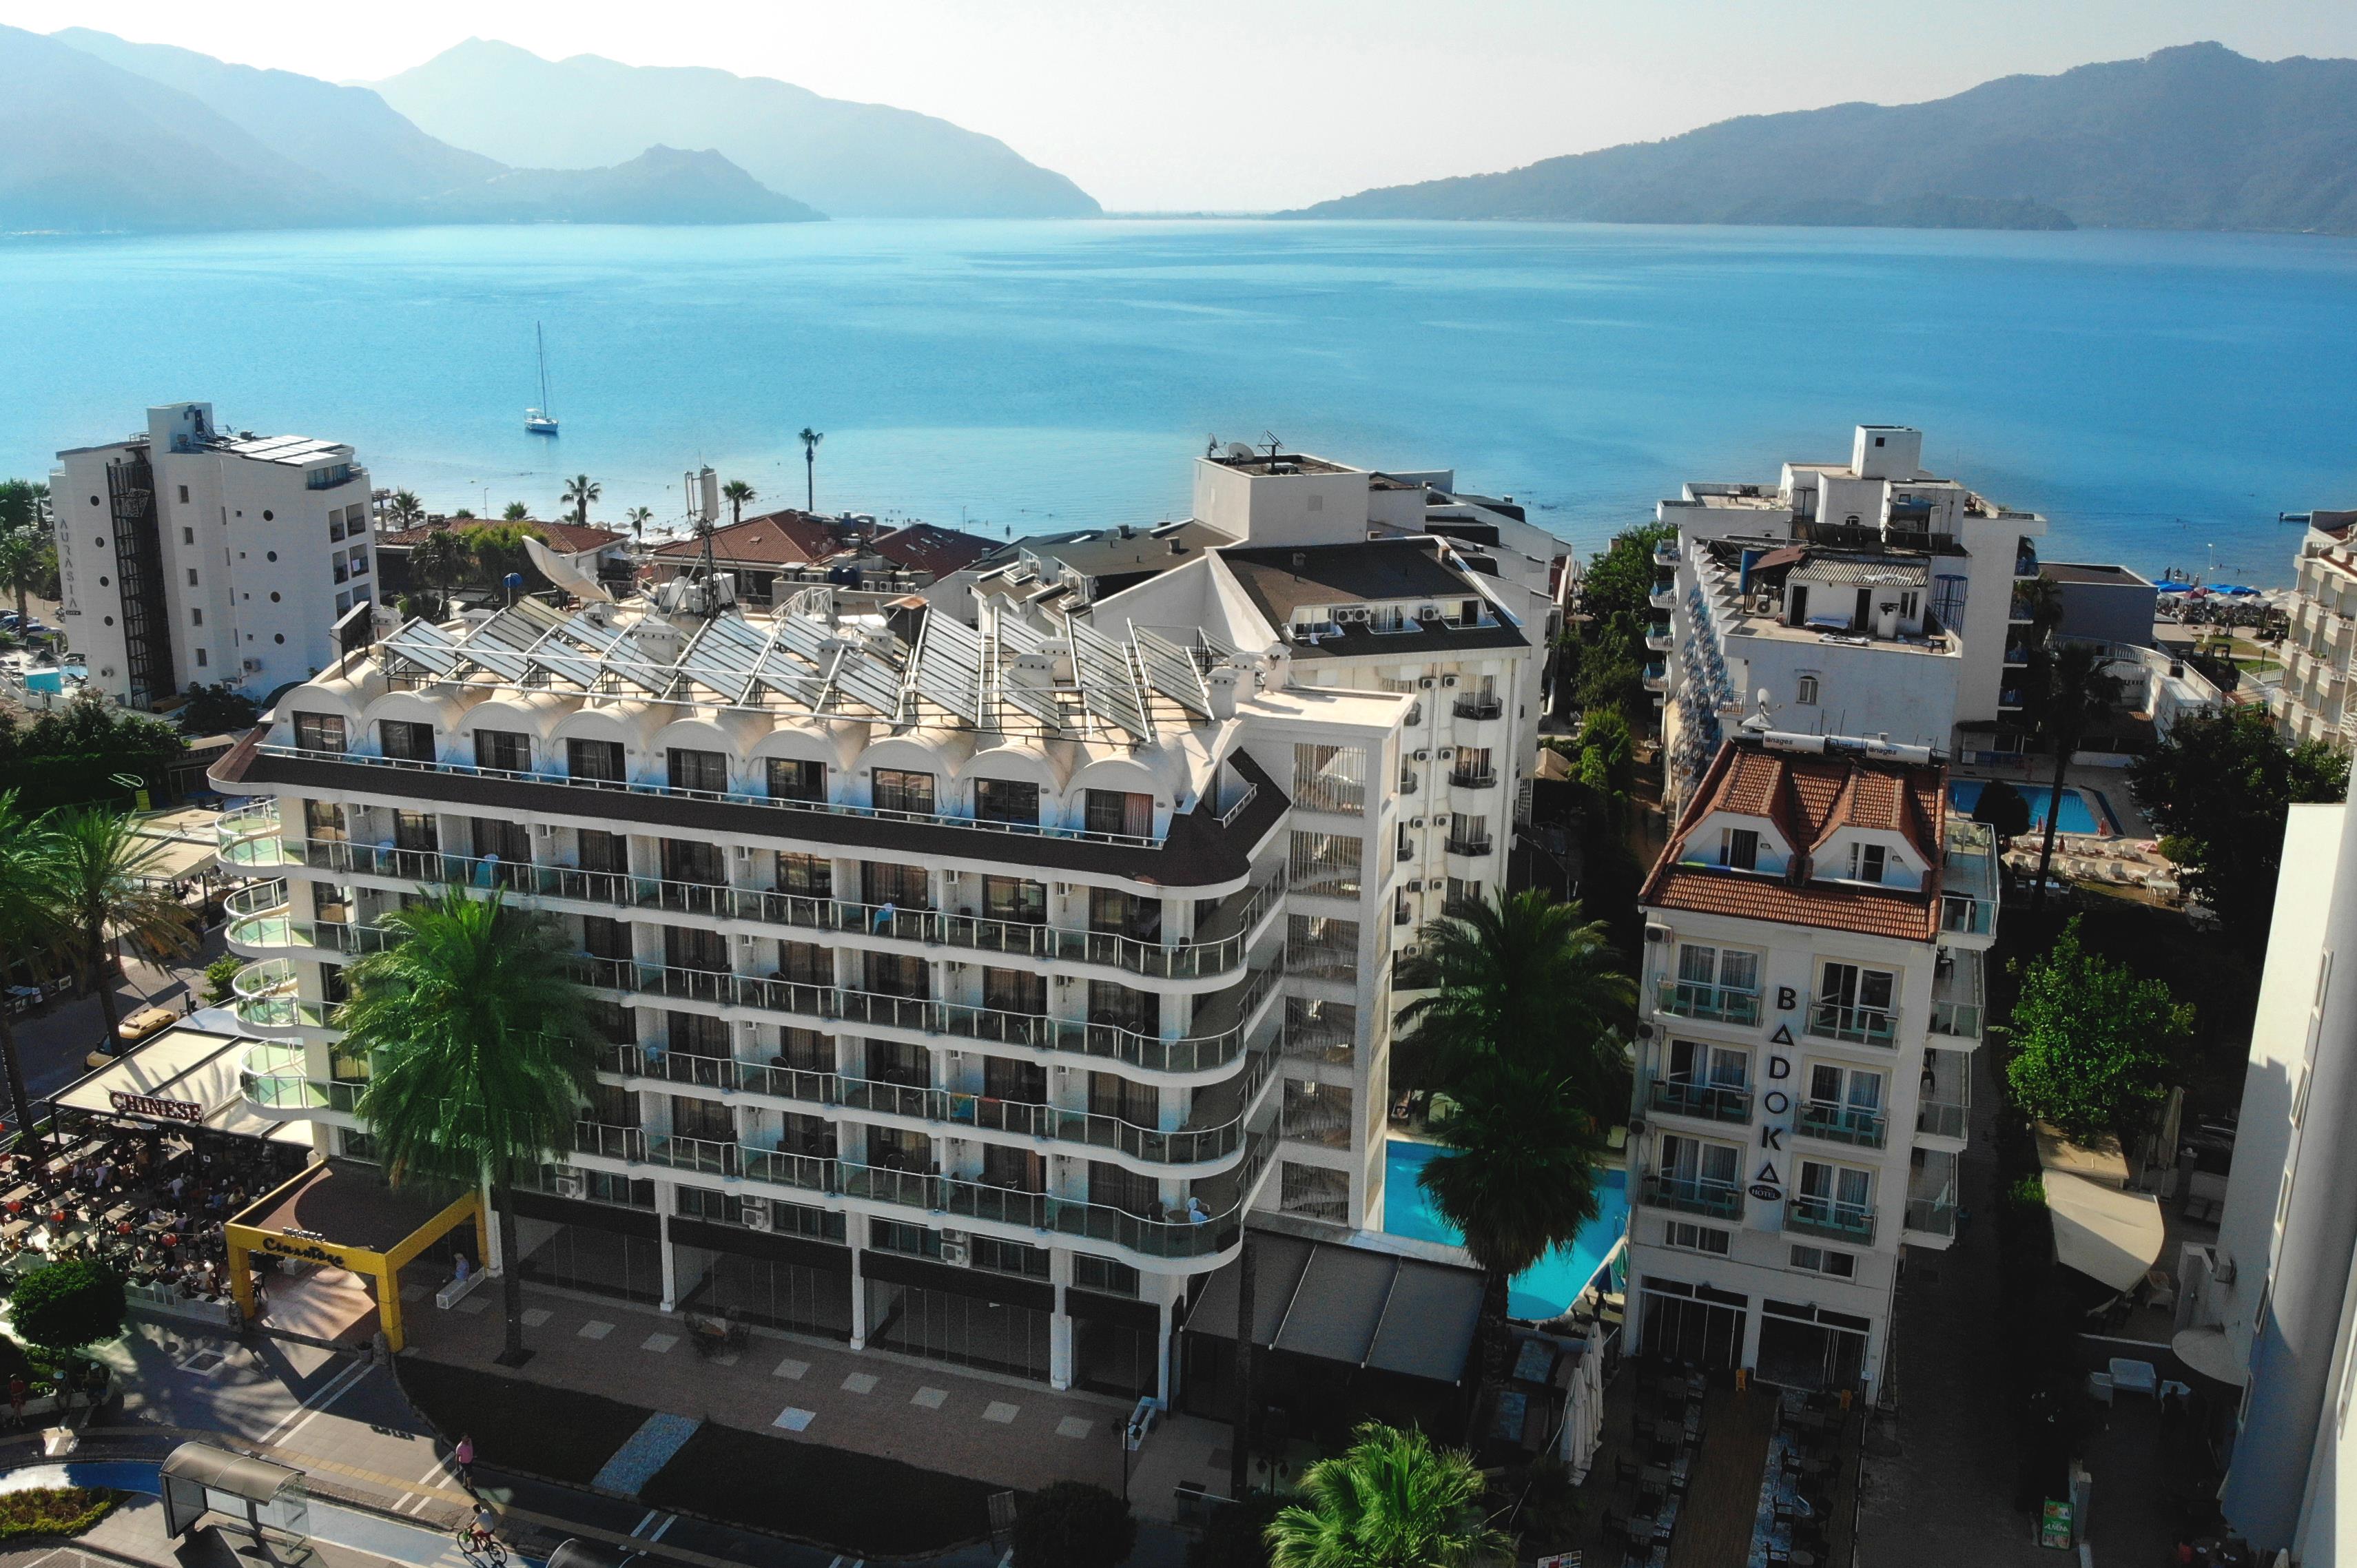 Cihantürk Hotel